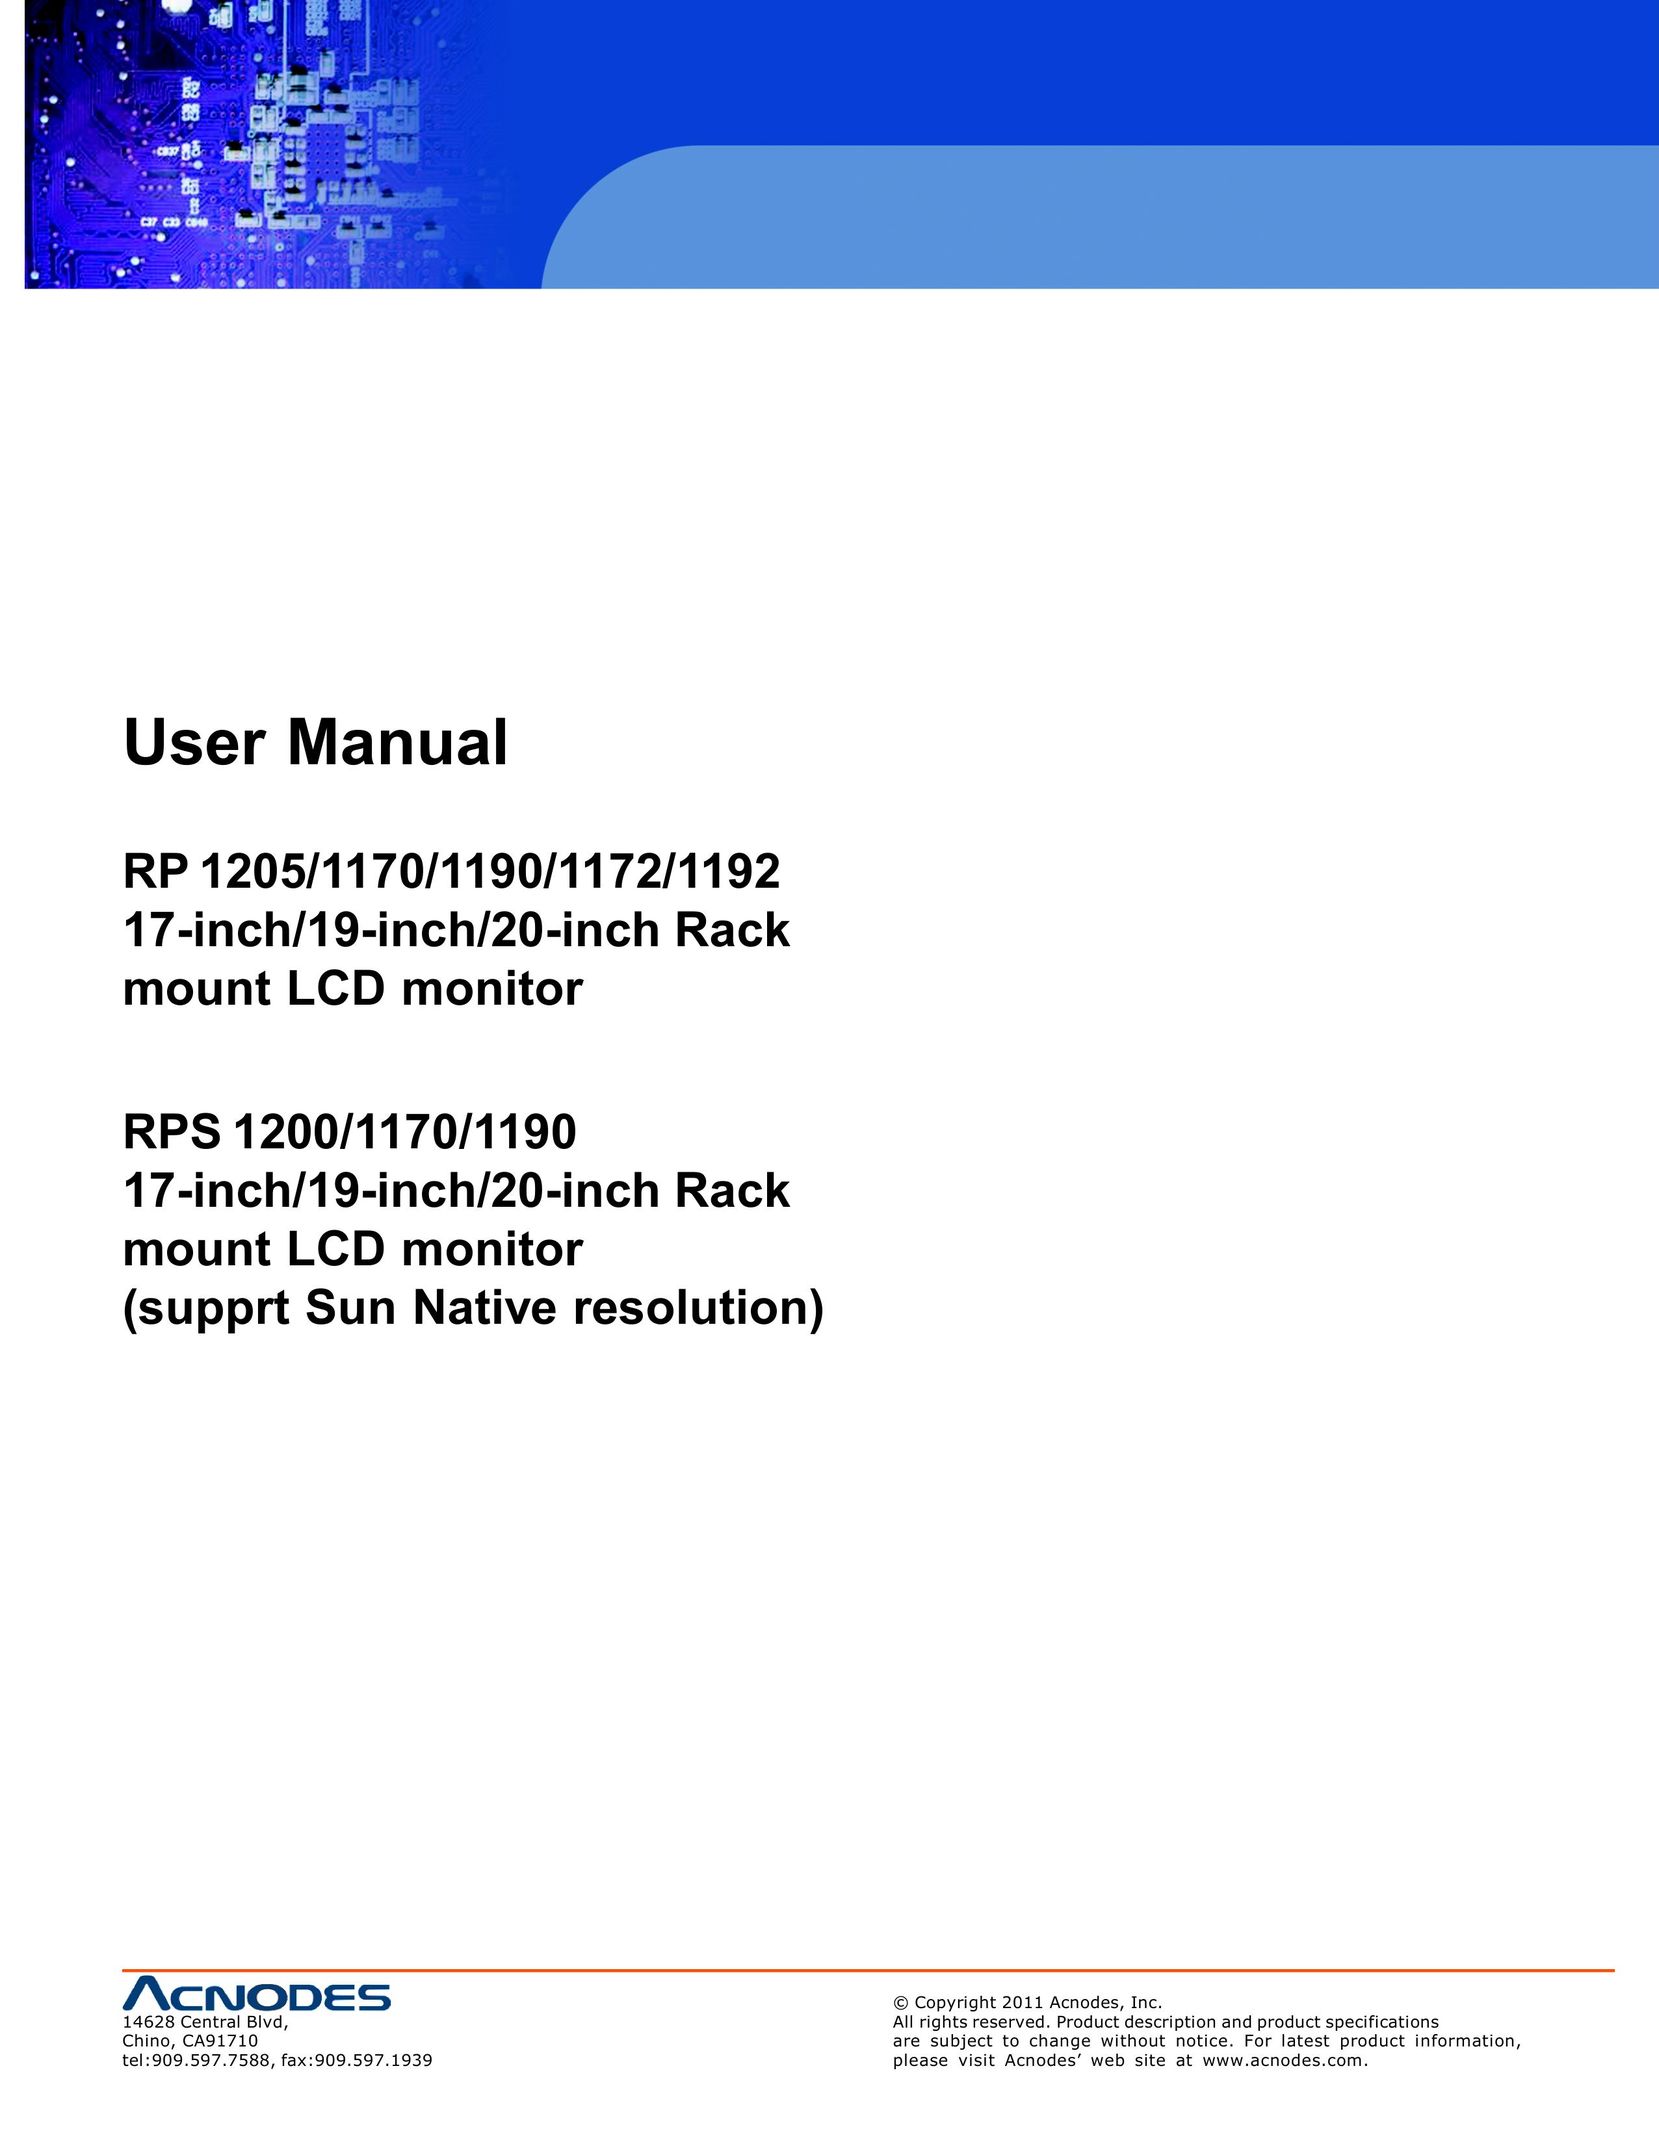 Acnodes RP 1205 Computer Monitor User Manual